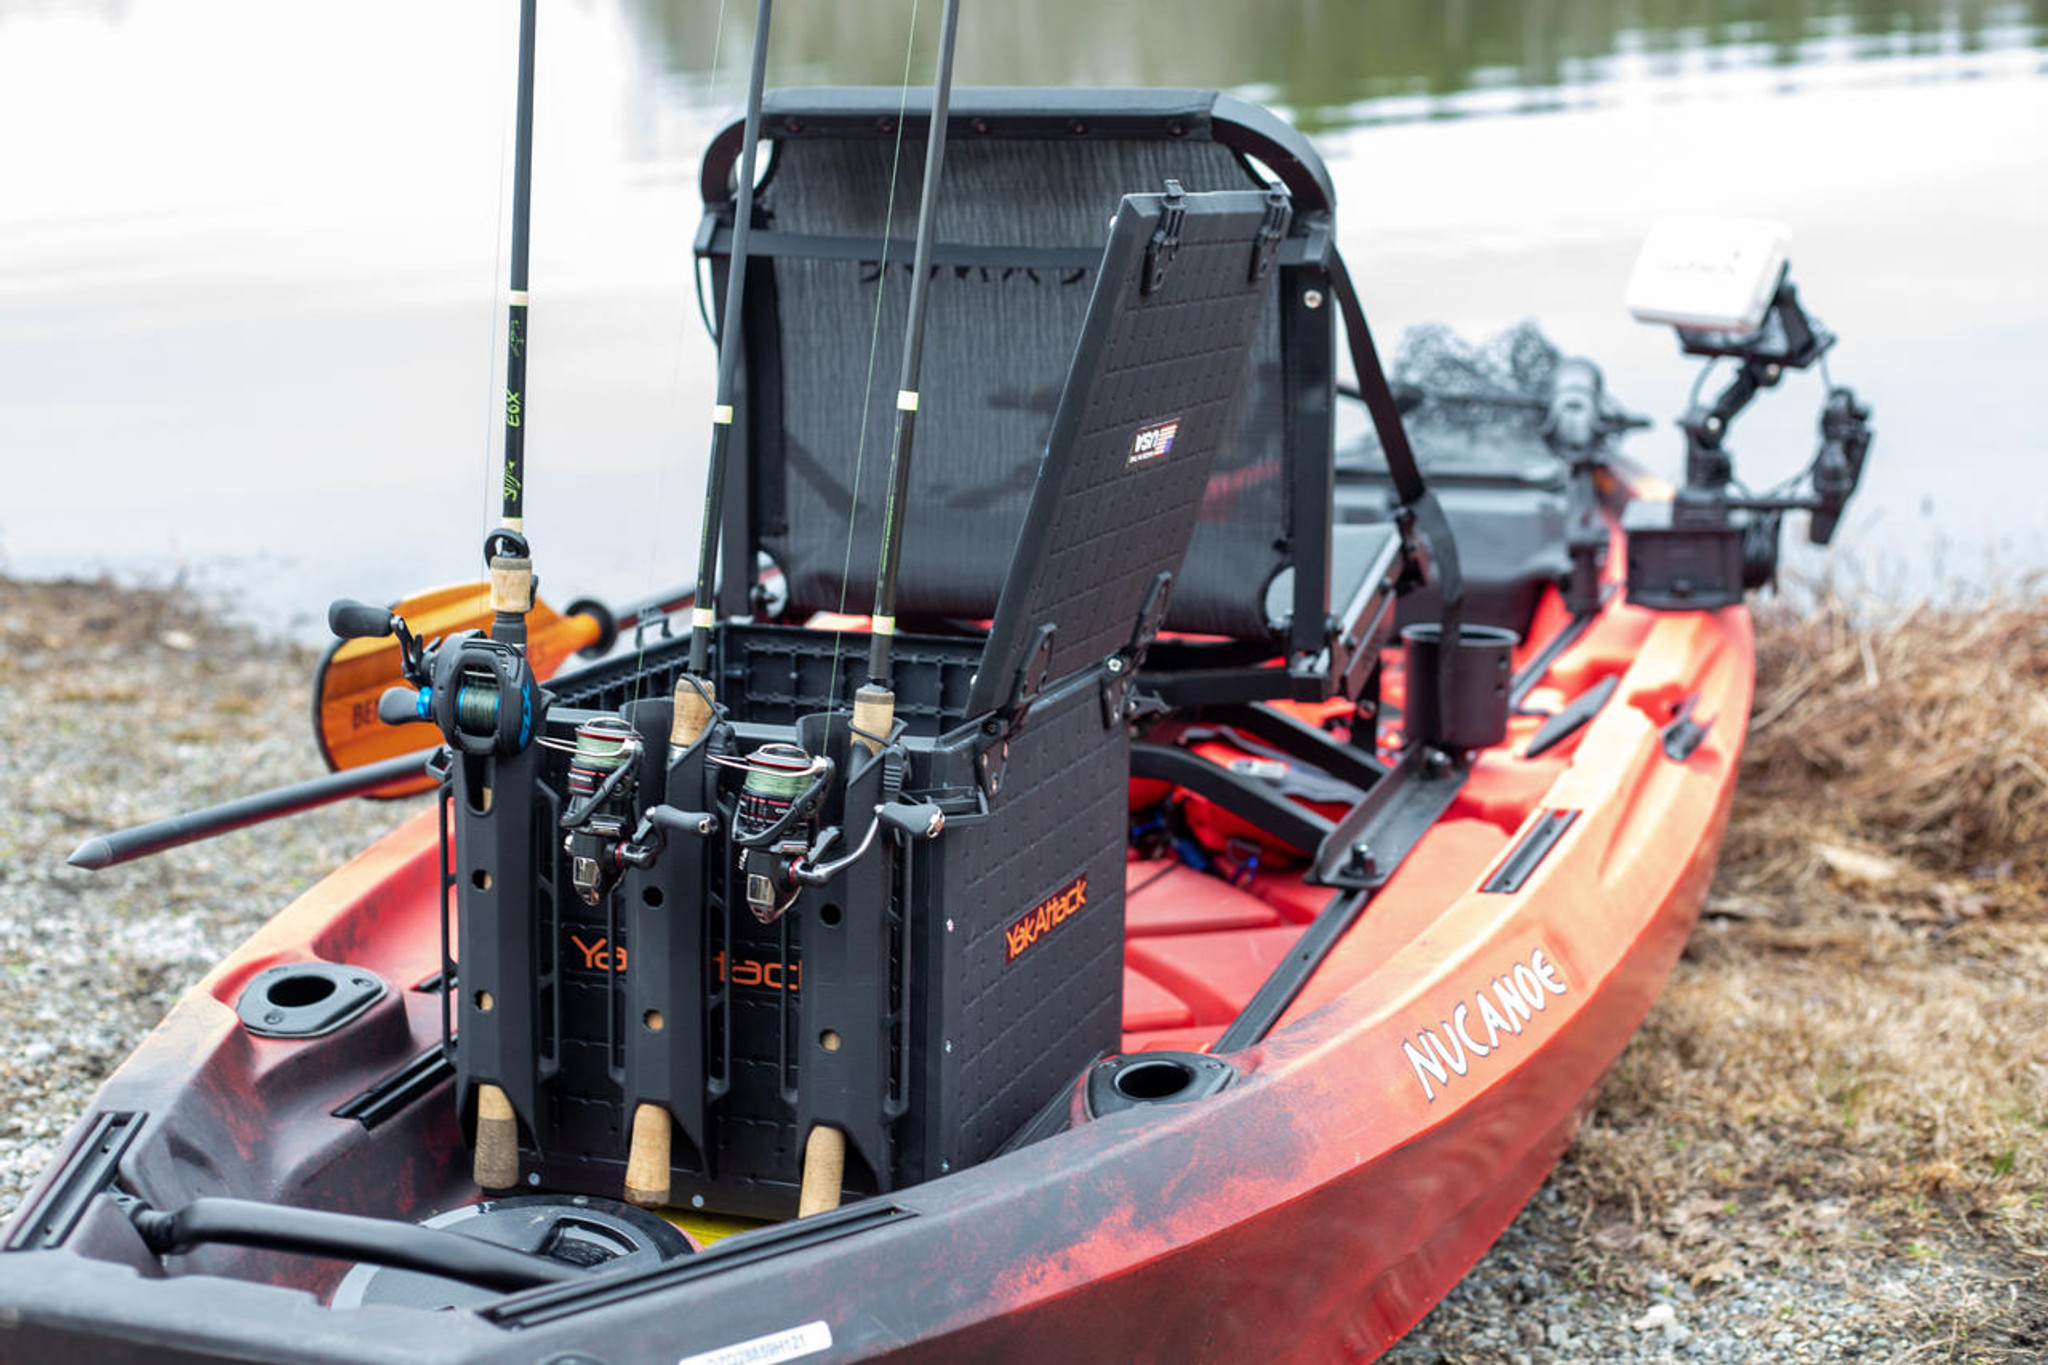 YakAttack® BlackPak Pro Kayak Fishing Crate 13 x 16 - Kayak